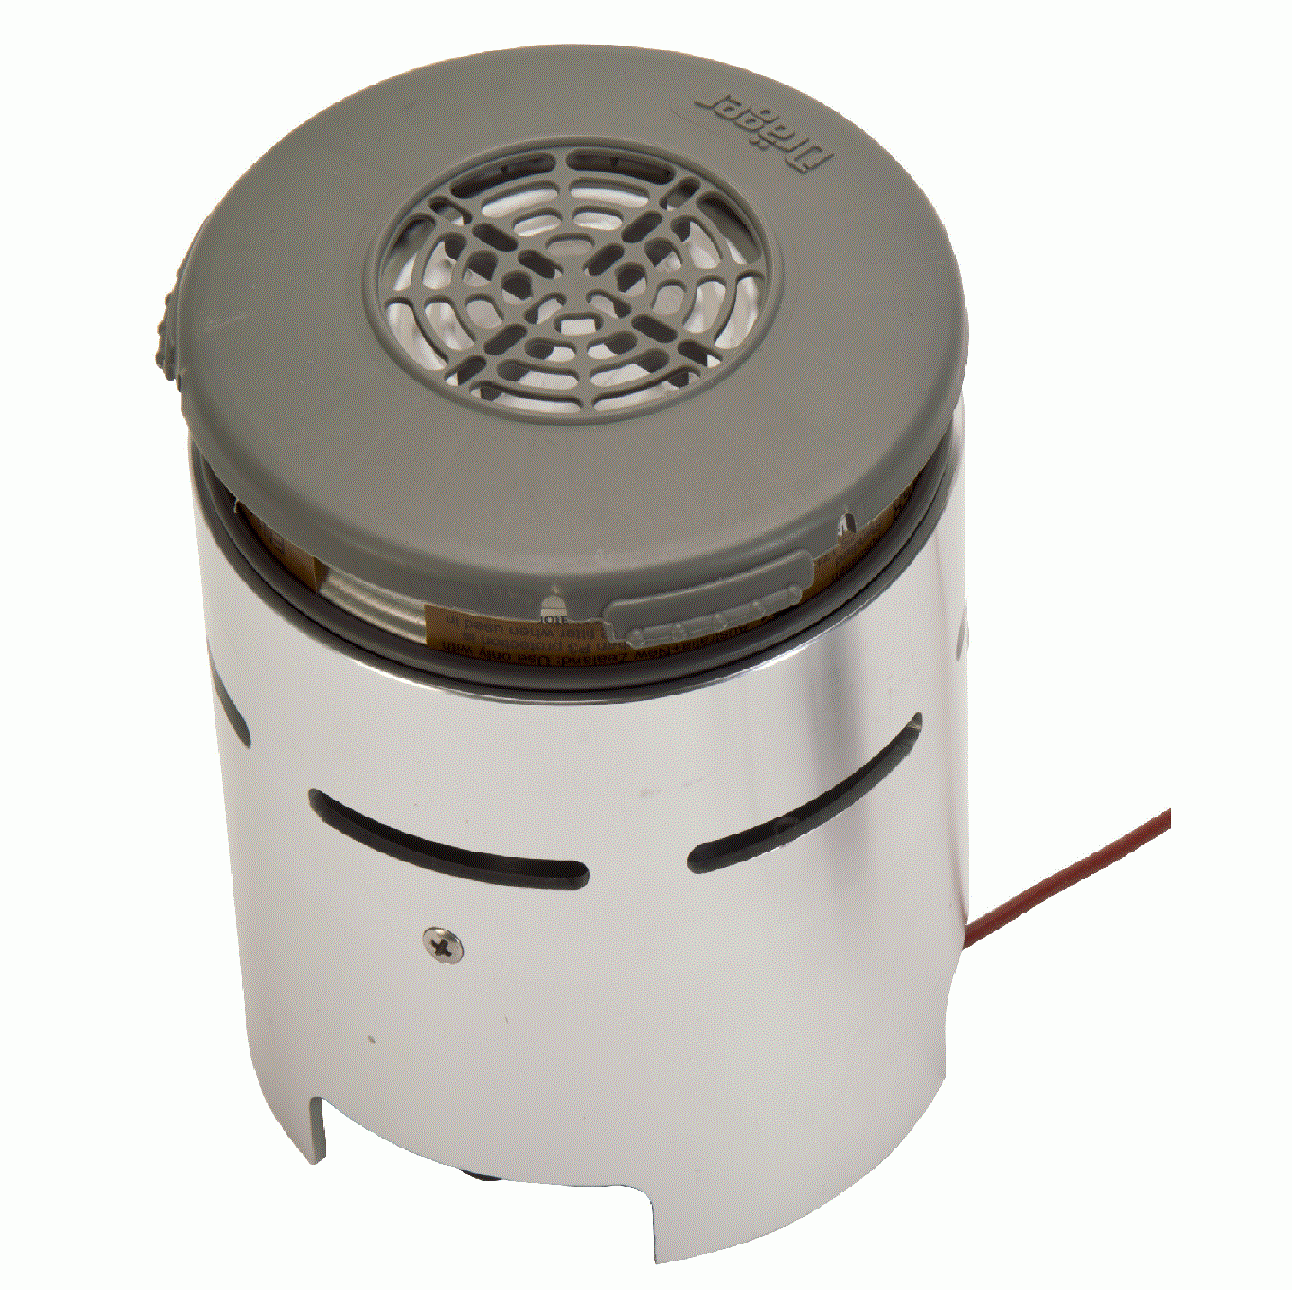 Incubator-Filter-Box, Gas Filter A1